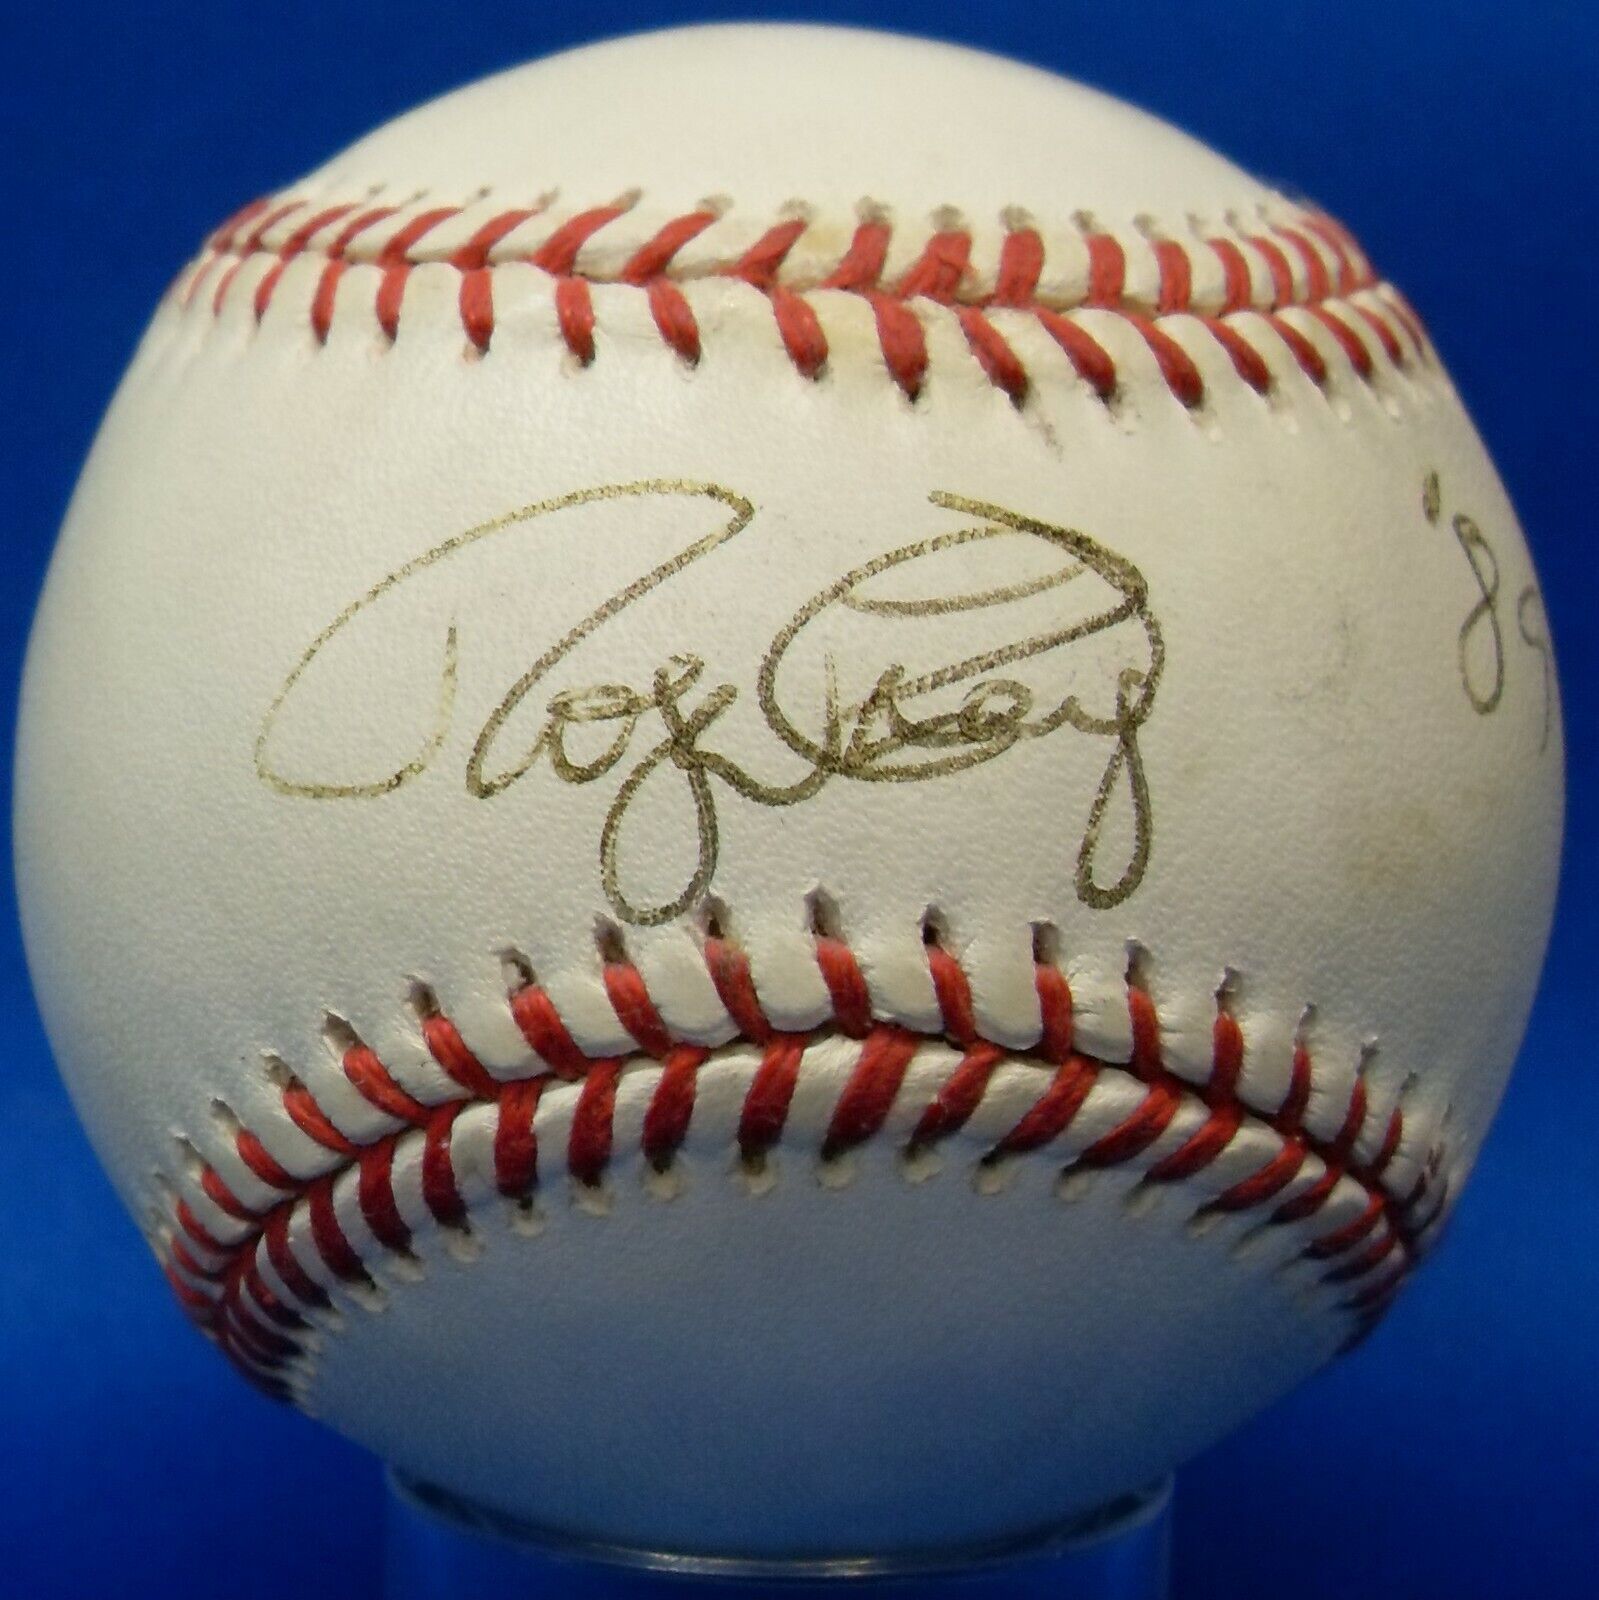 JSA Roger Craig Autographed Signed INSCR MLB Leonard S. Coleman Baseball DBB 255